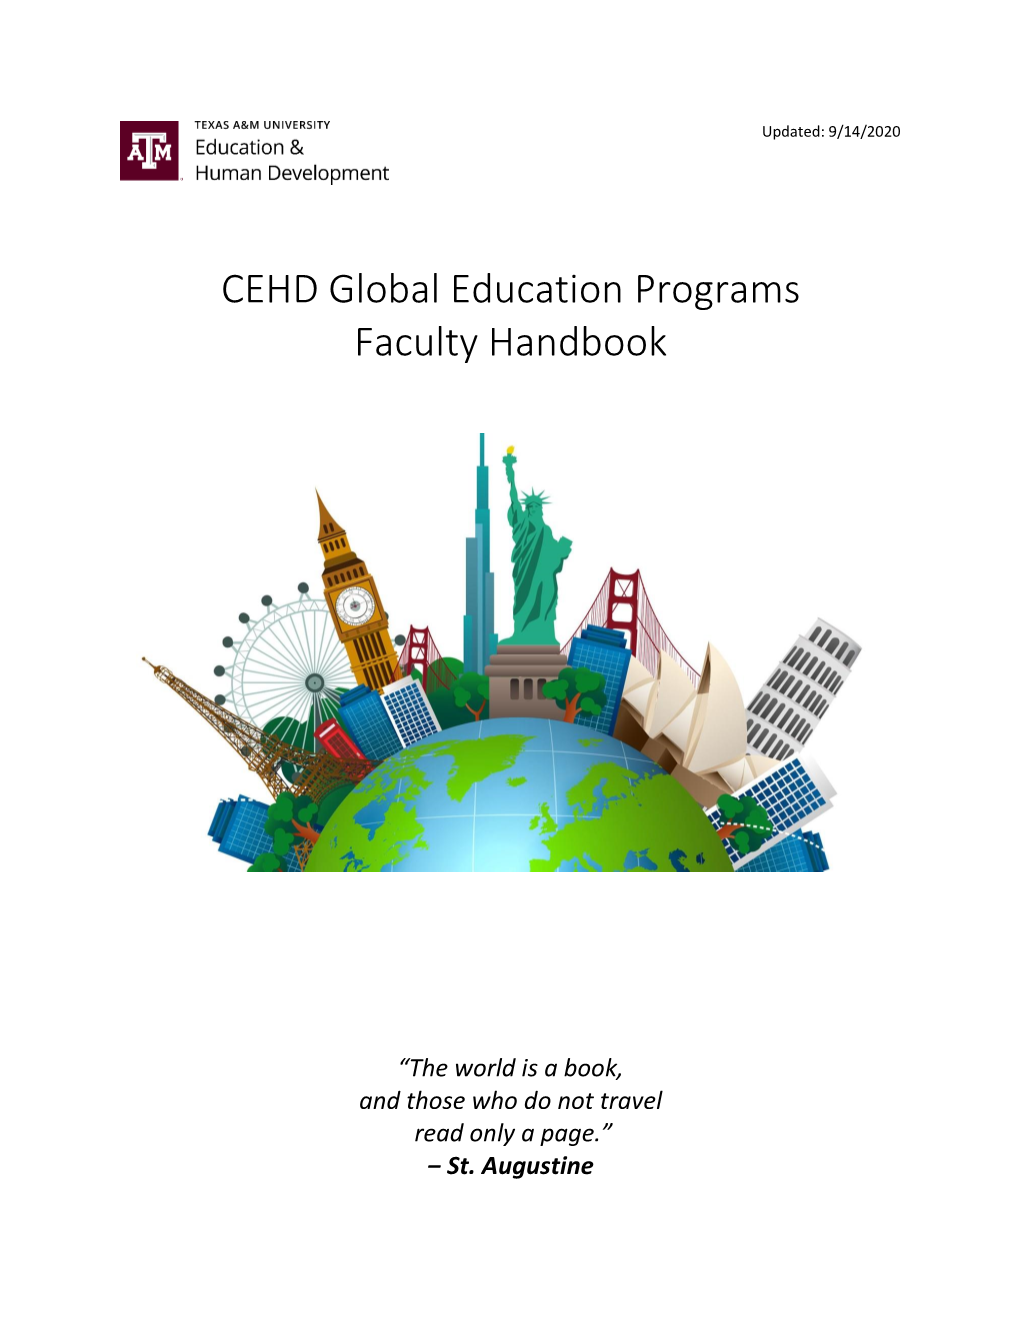 CEHD Global Education Programs Faculty Handbook